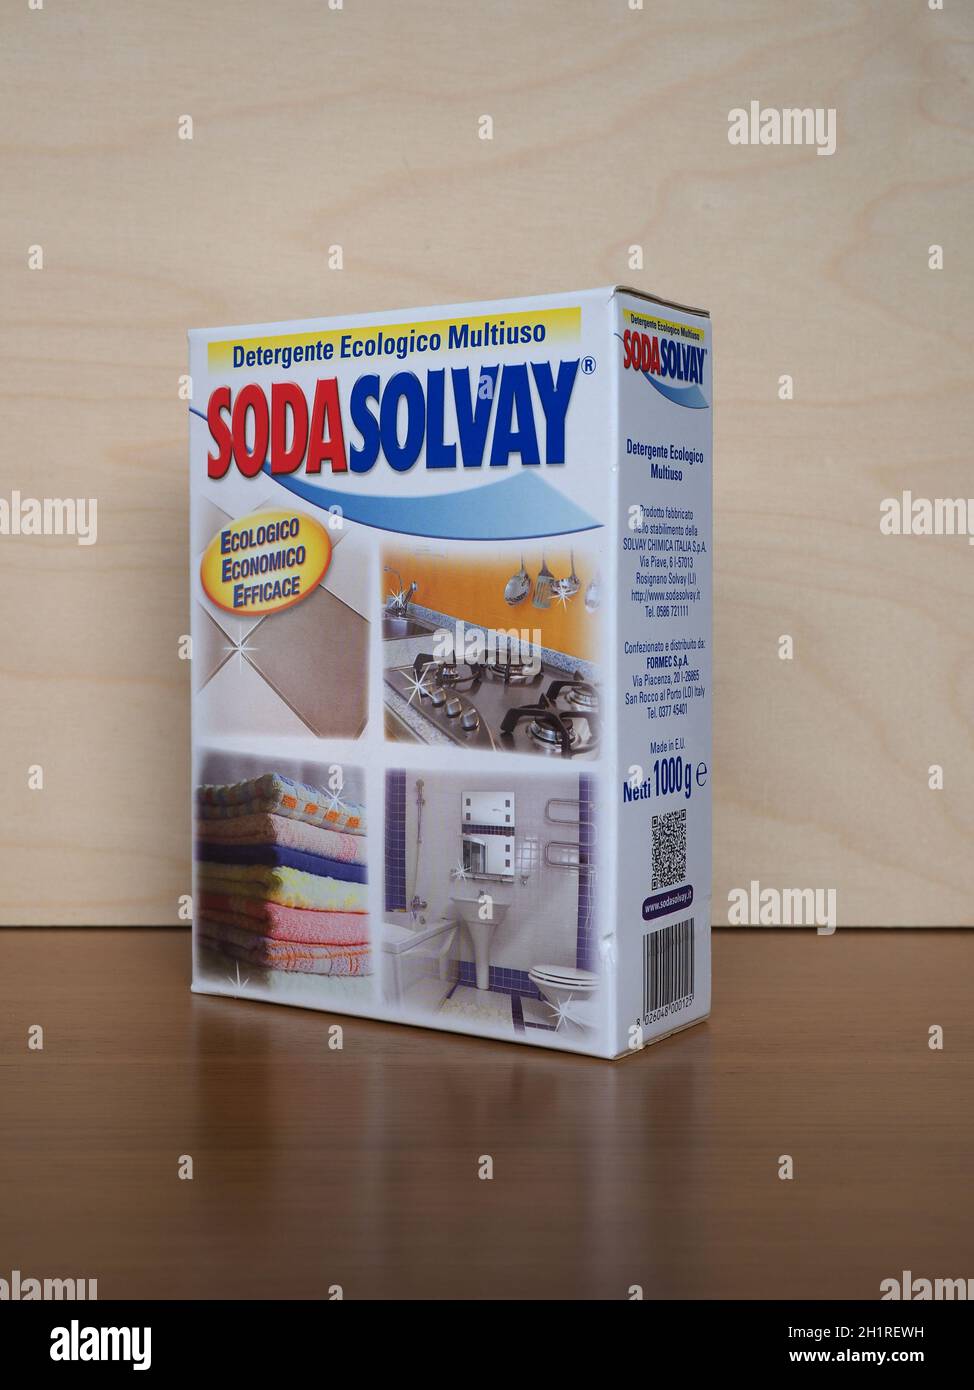 BRUESSEL, BELGIUM - CIRCA FEBRUARY 2021: Packet of Soda Solvay eco